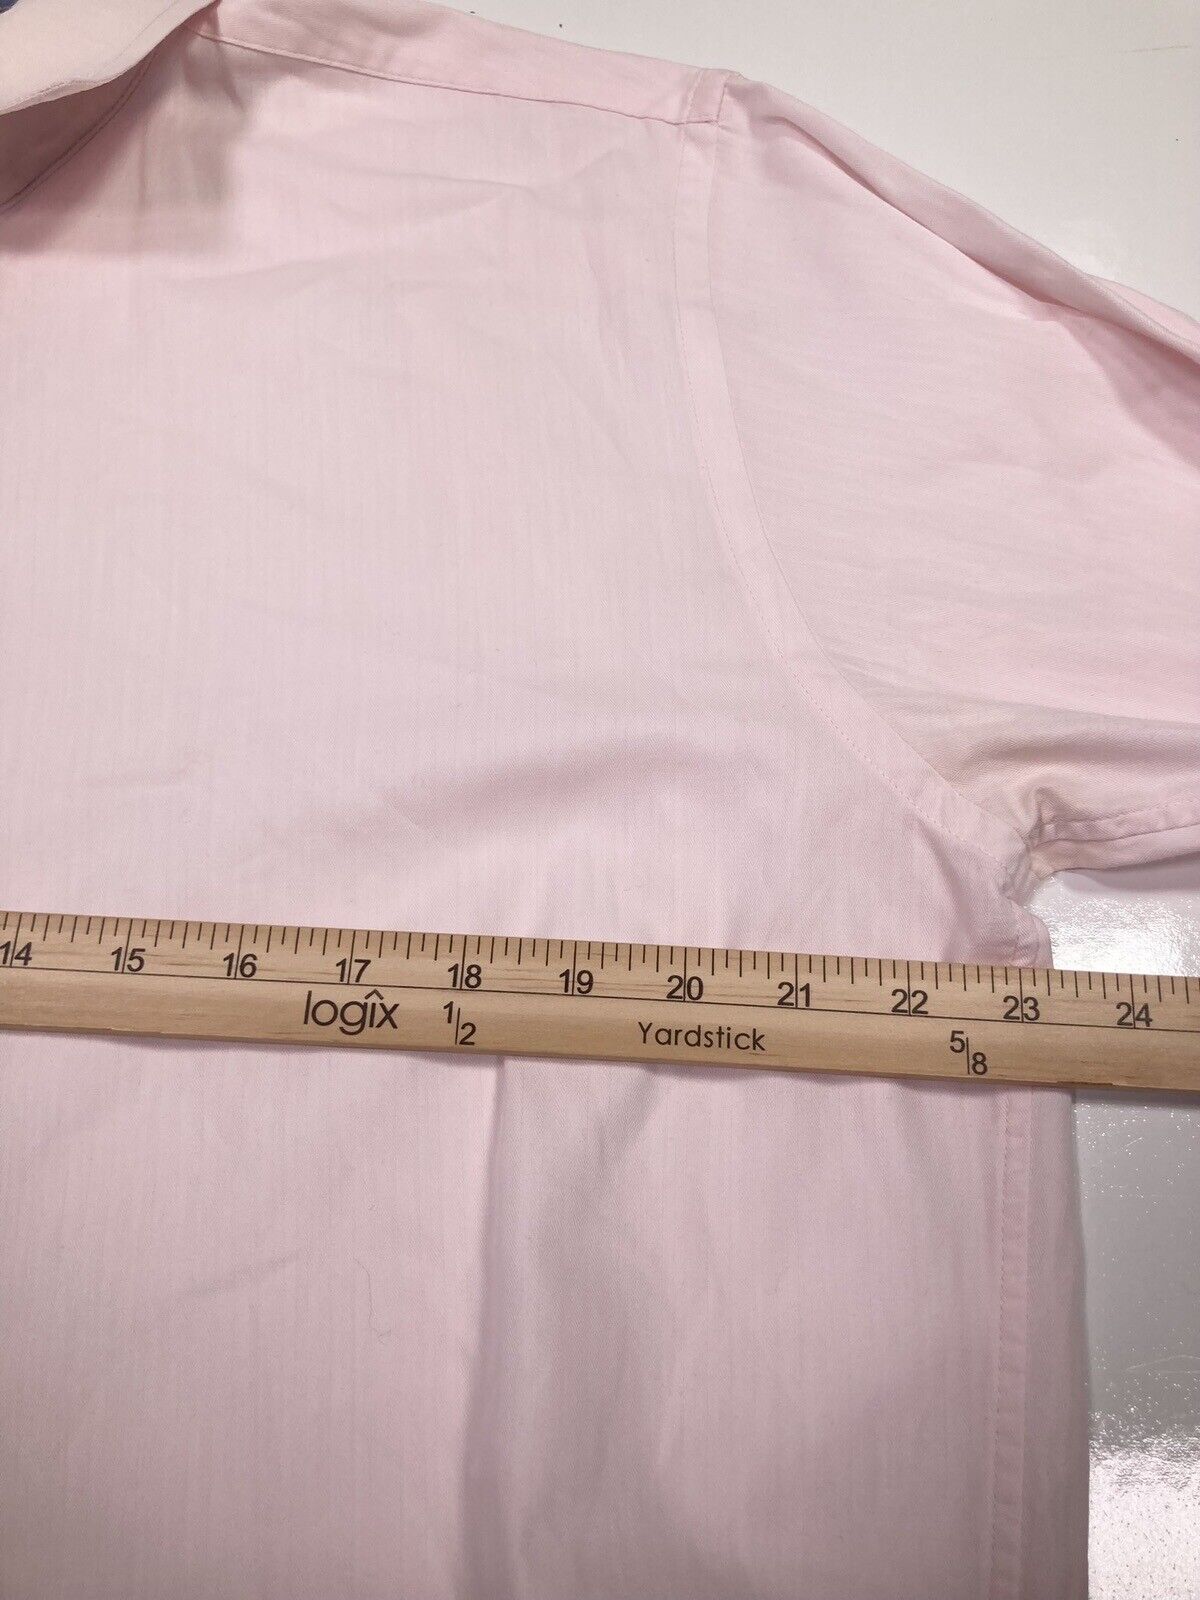 Alton Lane Shirt Cotton Dress Shirts Blue & Pink … - image 11